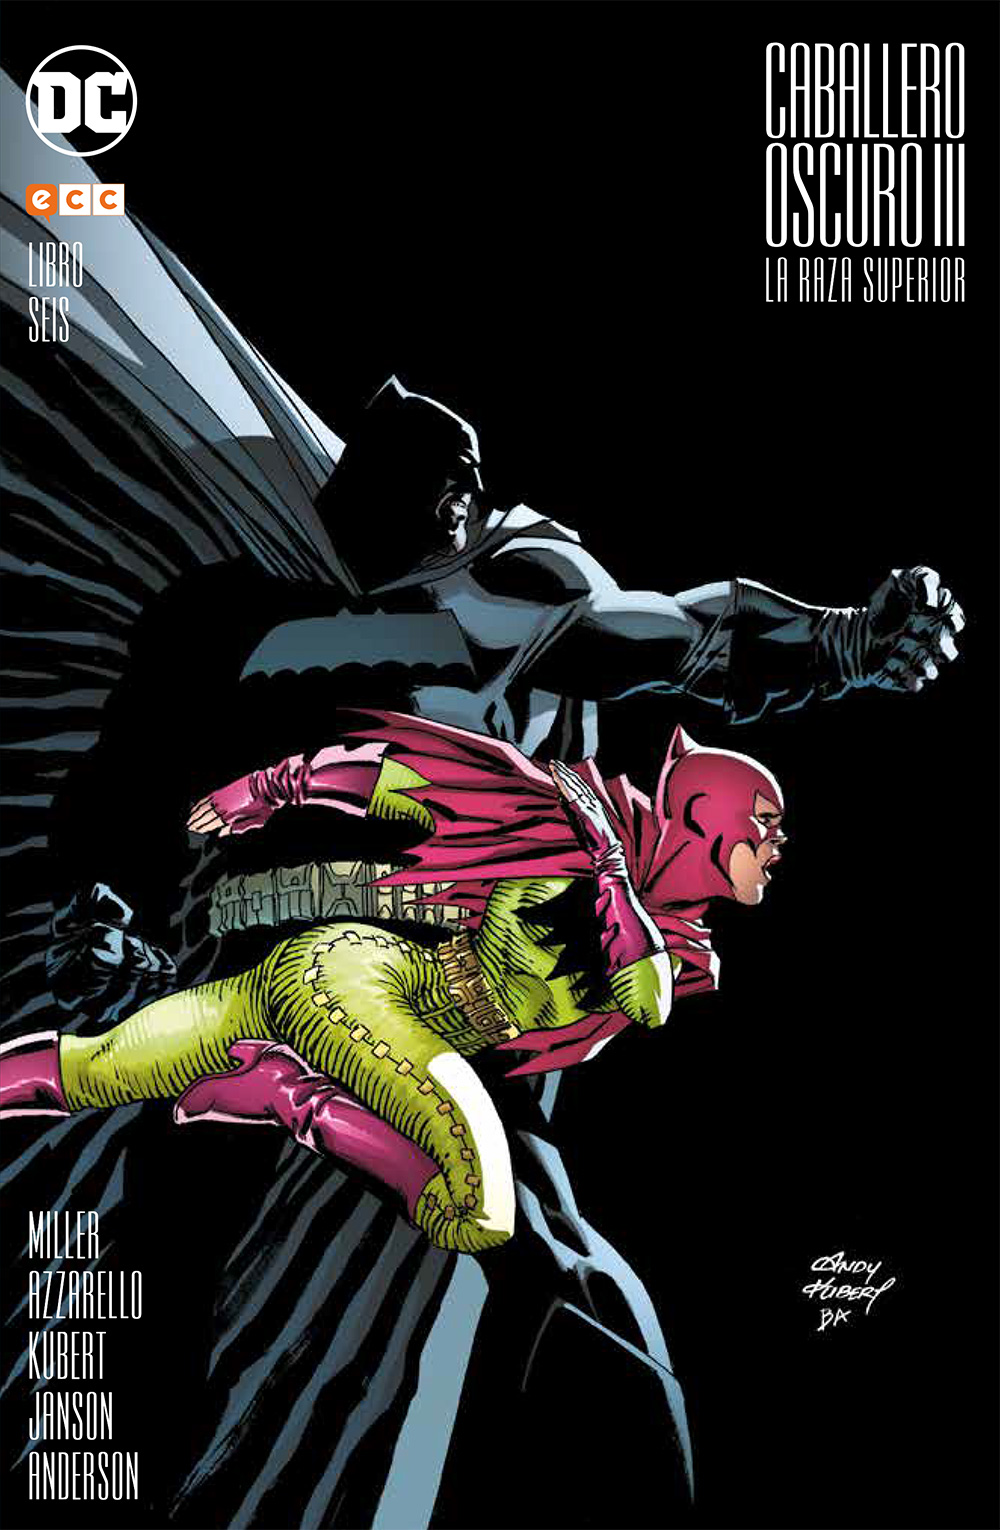 Comic BATMAN: EL CABALLERO OSCURO III num: 6 | Totcomic